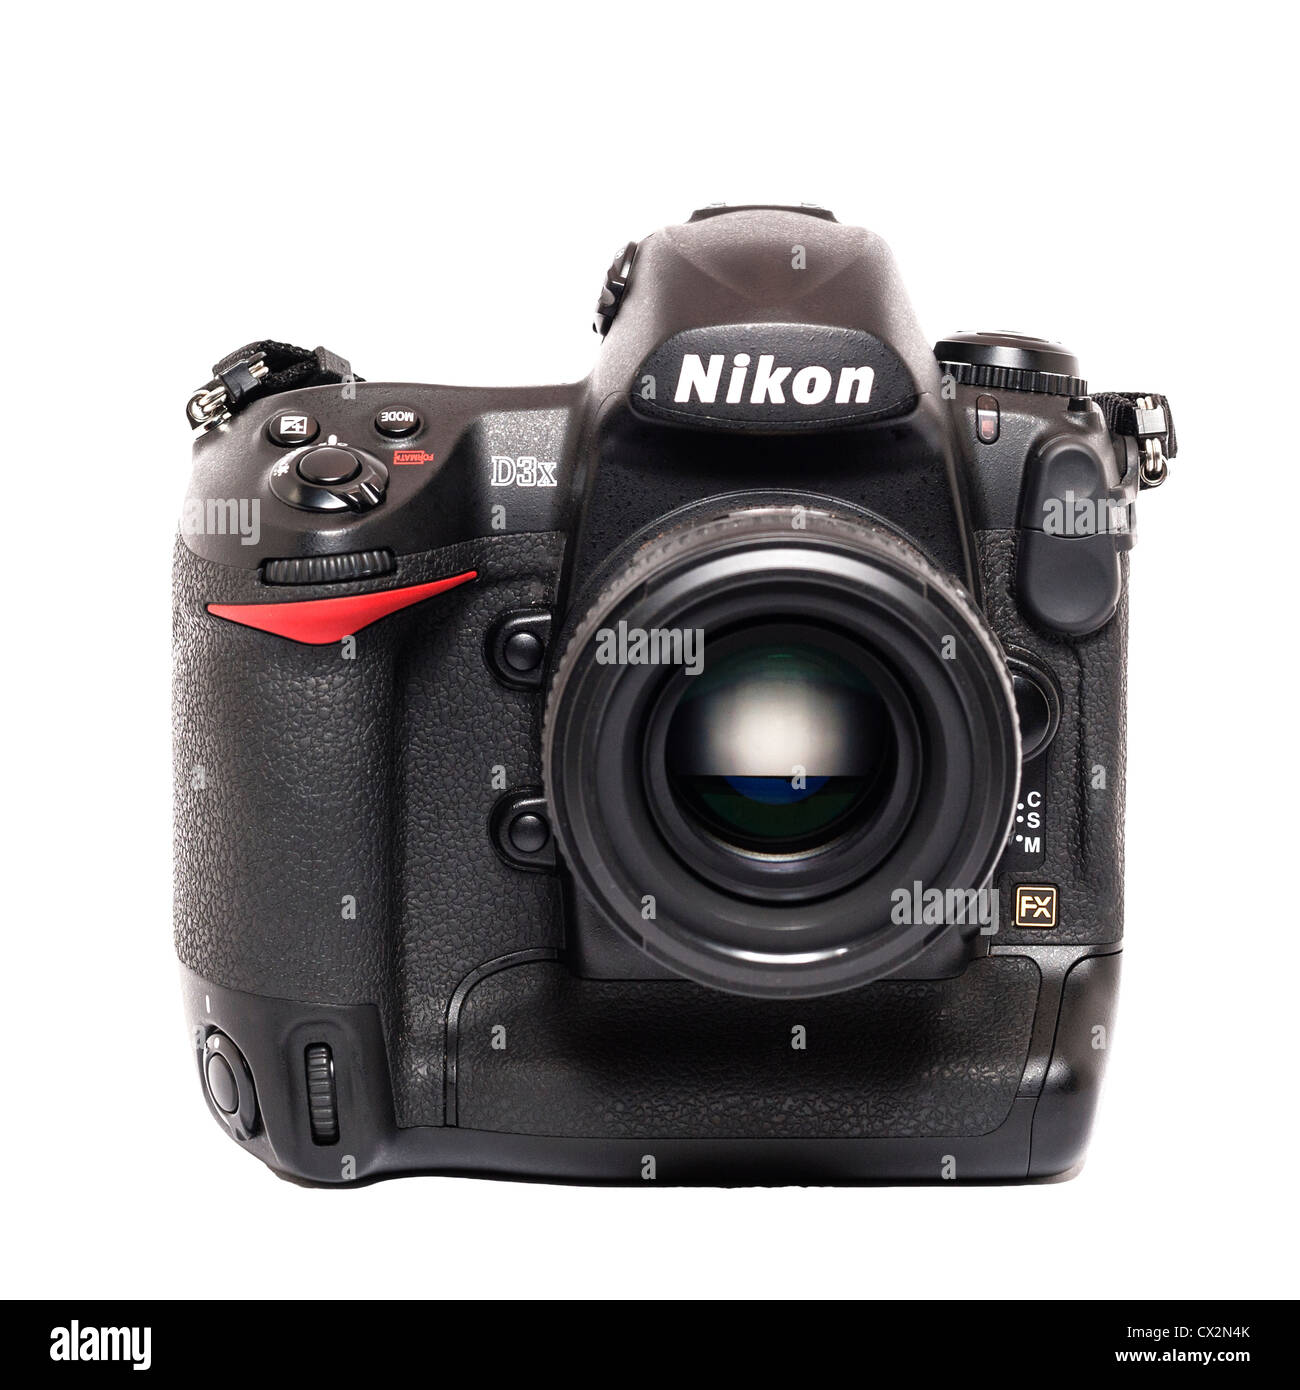 A Nikon D3x flagship model DSLR professional grade digital camera on a white background Stock Photo